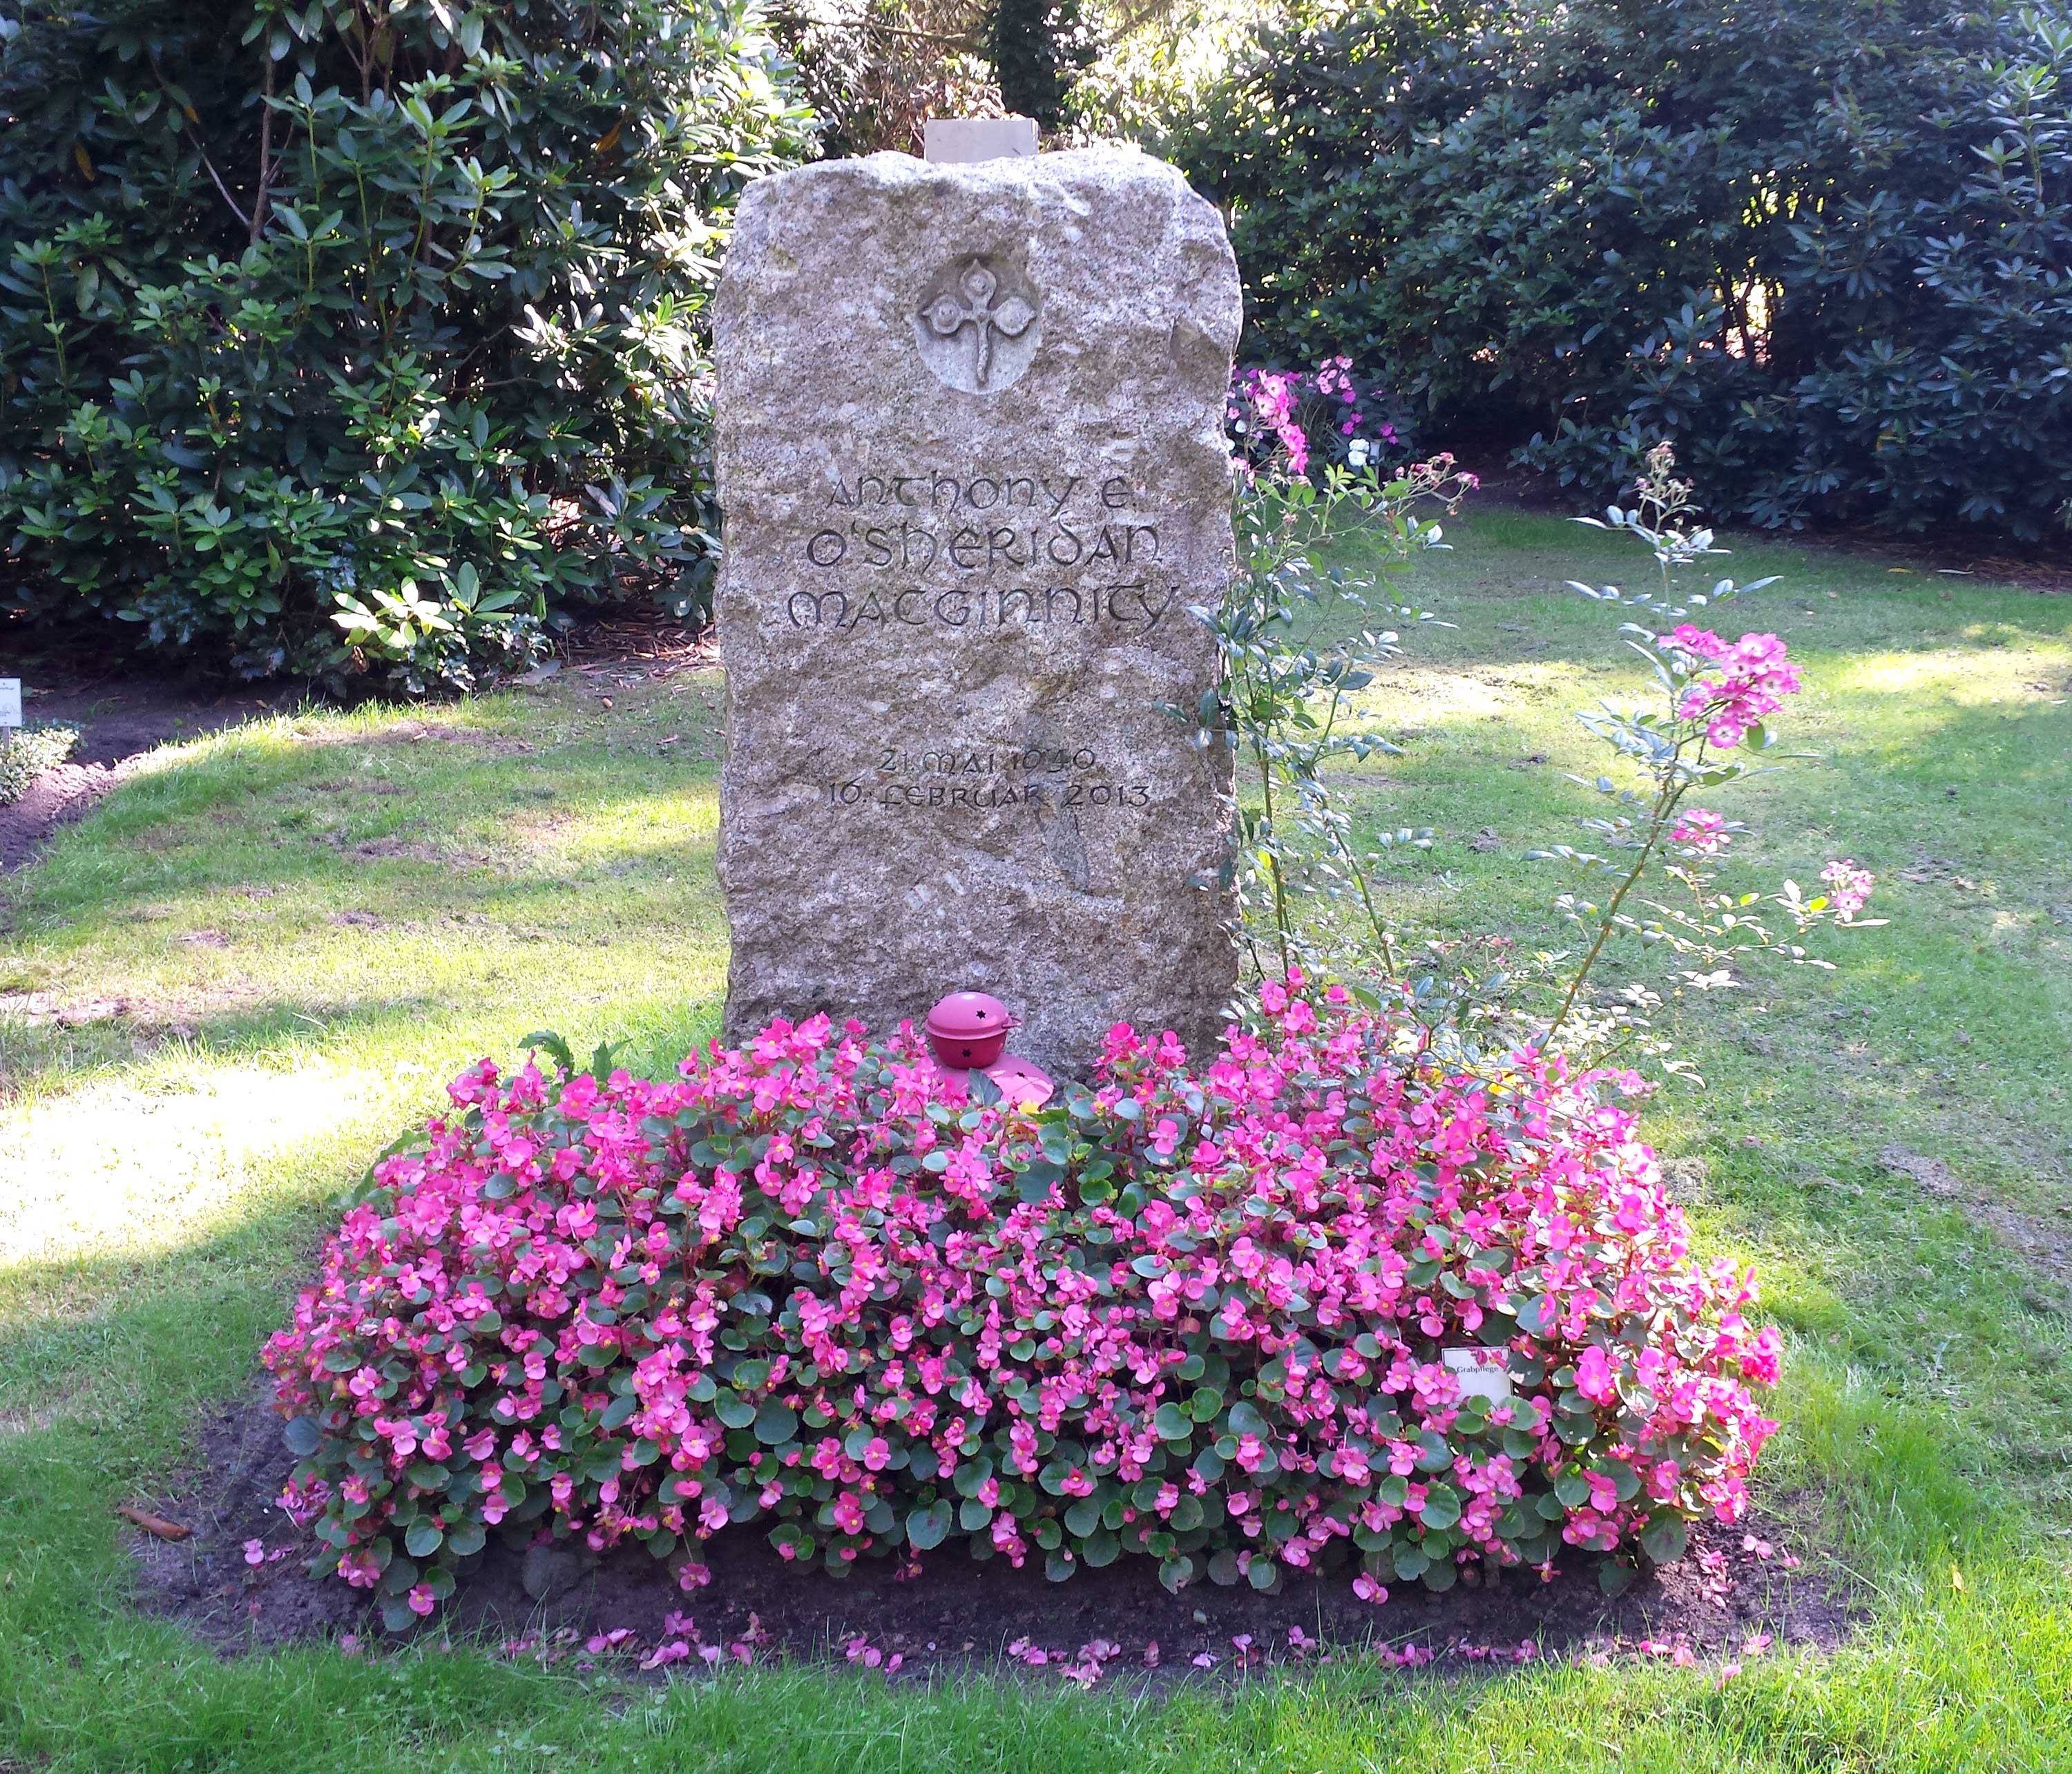 Das Grab von Tony Sheridan auf dem Ohlsdorfer Friedhof in Hamburg